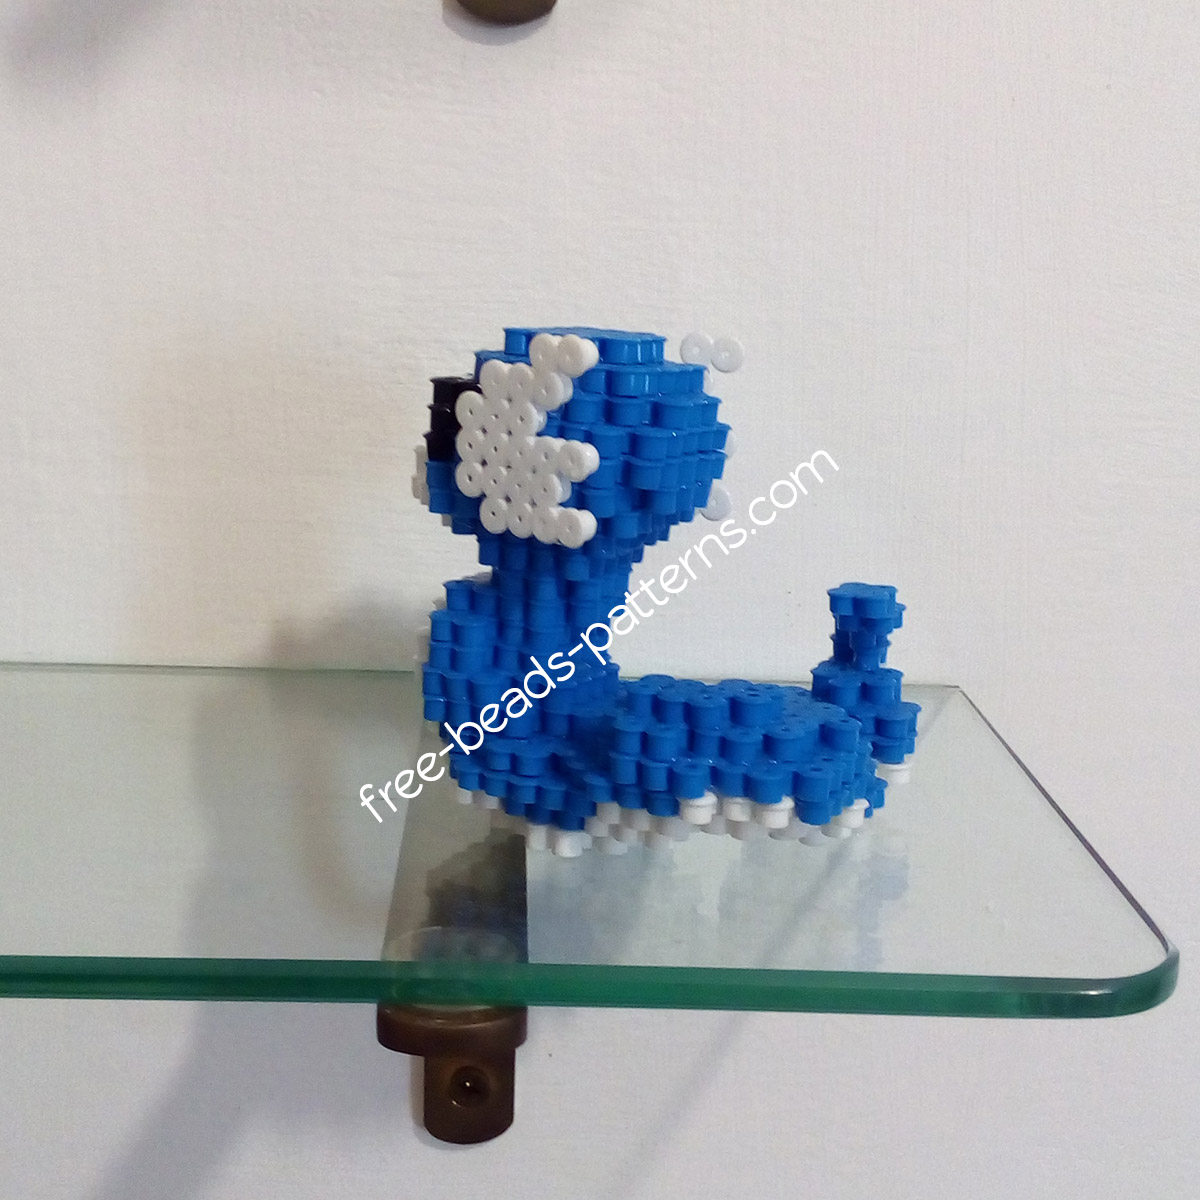 Pokemon Dratini 3D perler beads hama beads pyssla work photos (6)